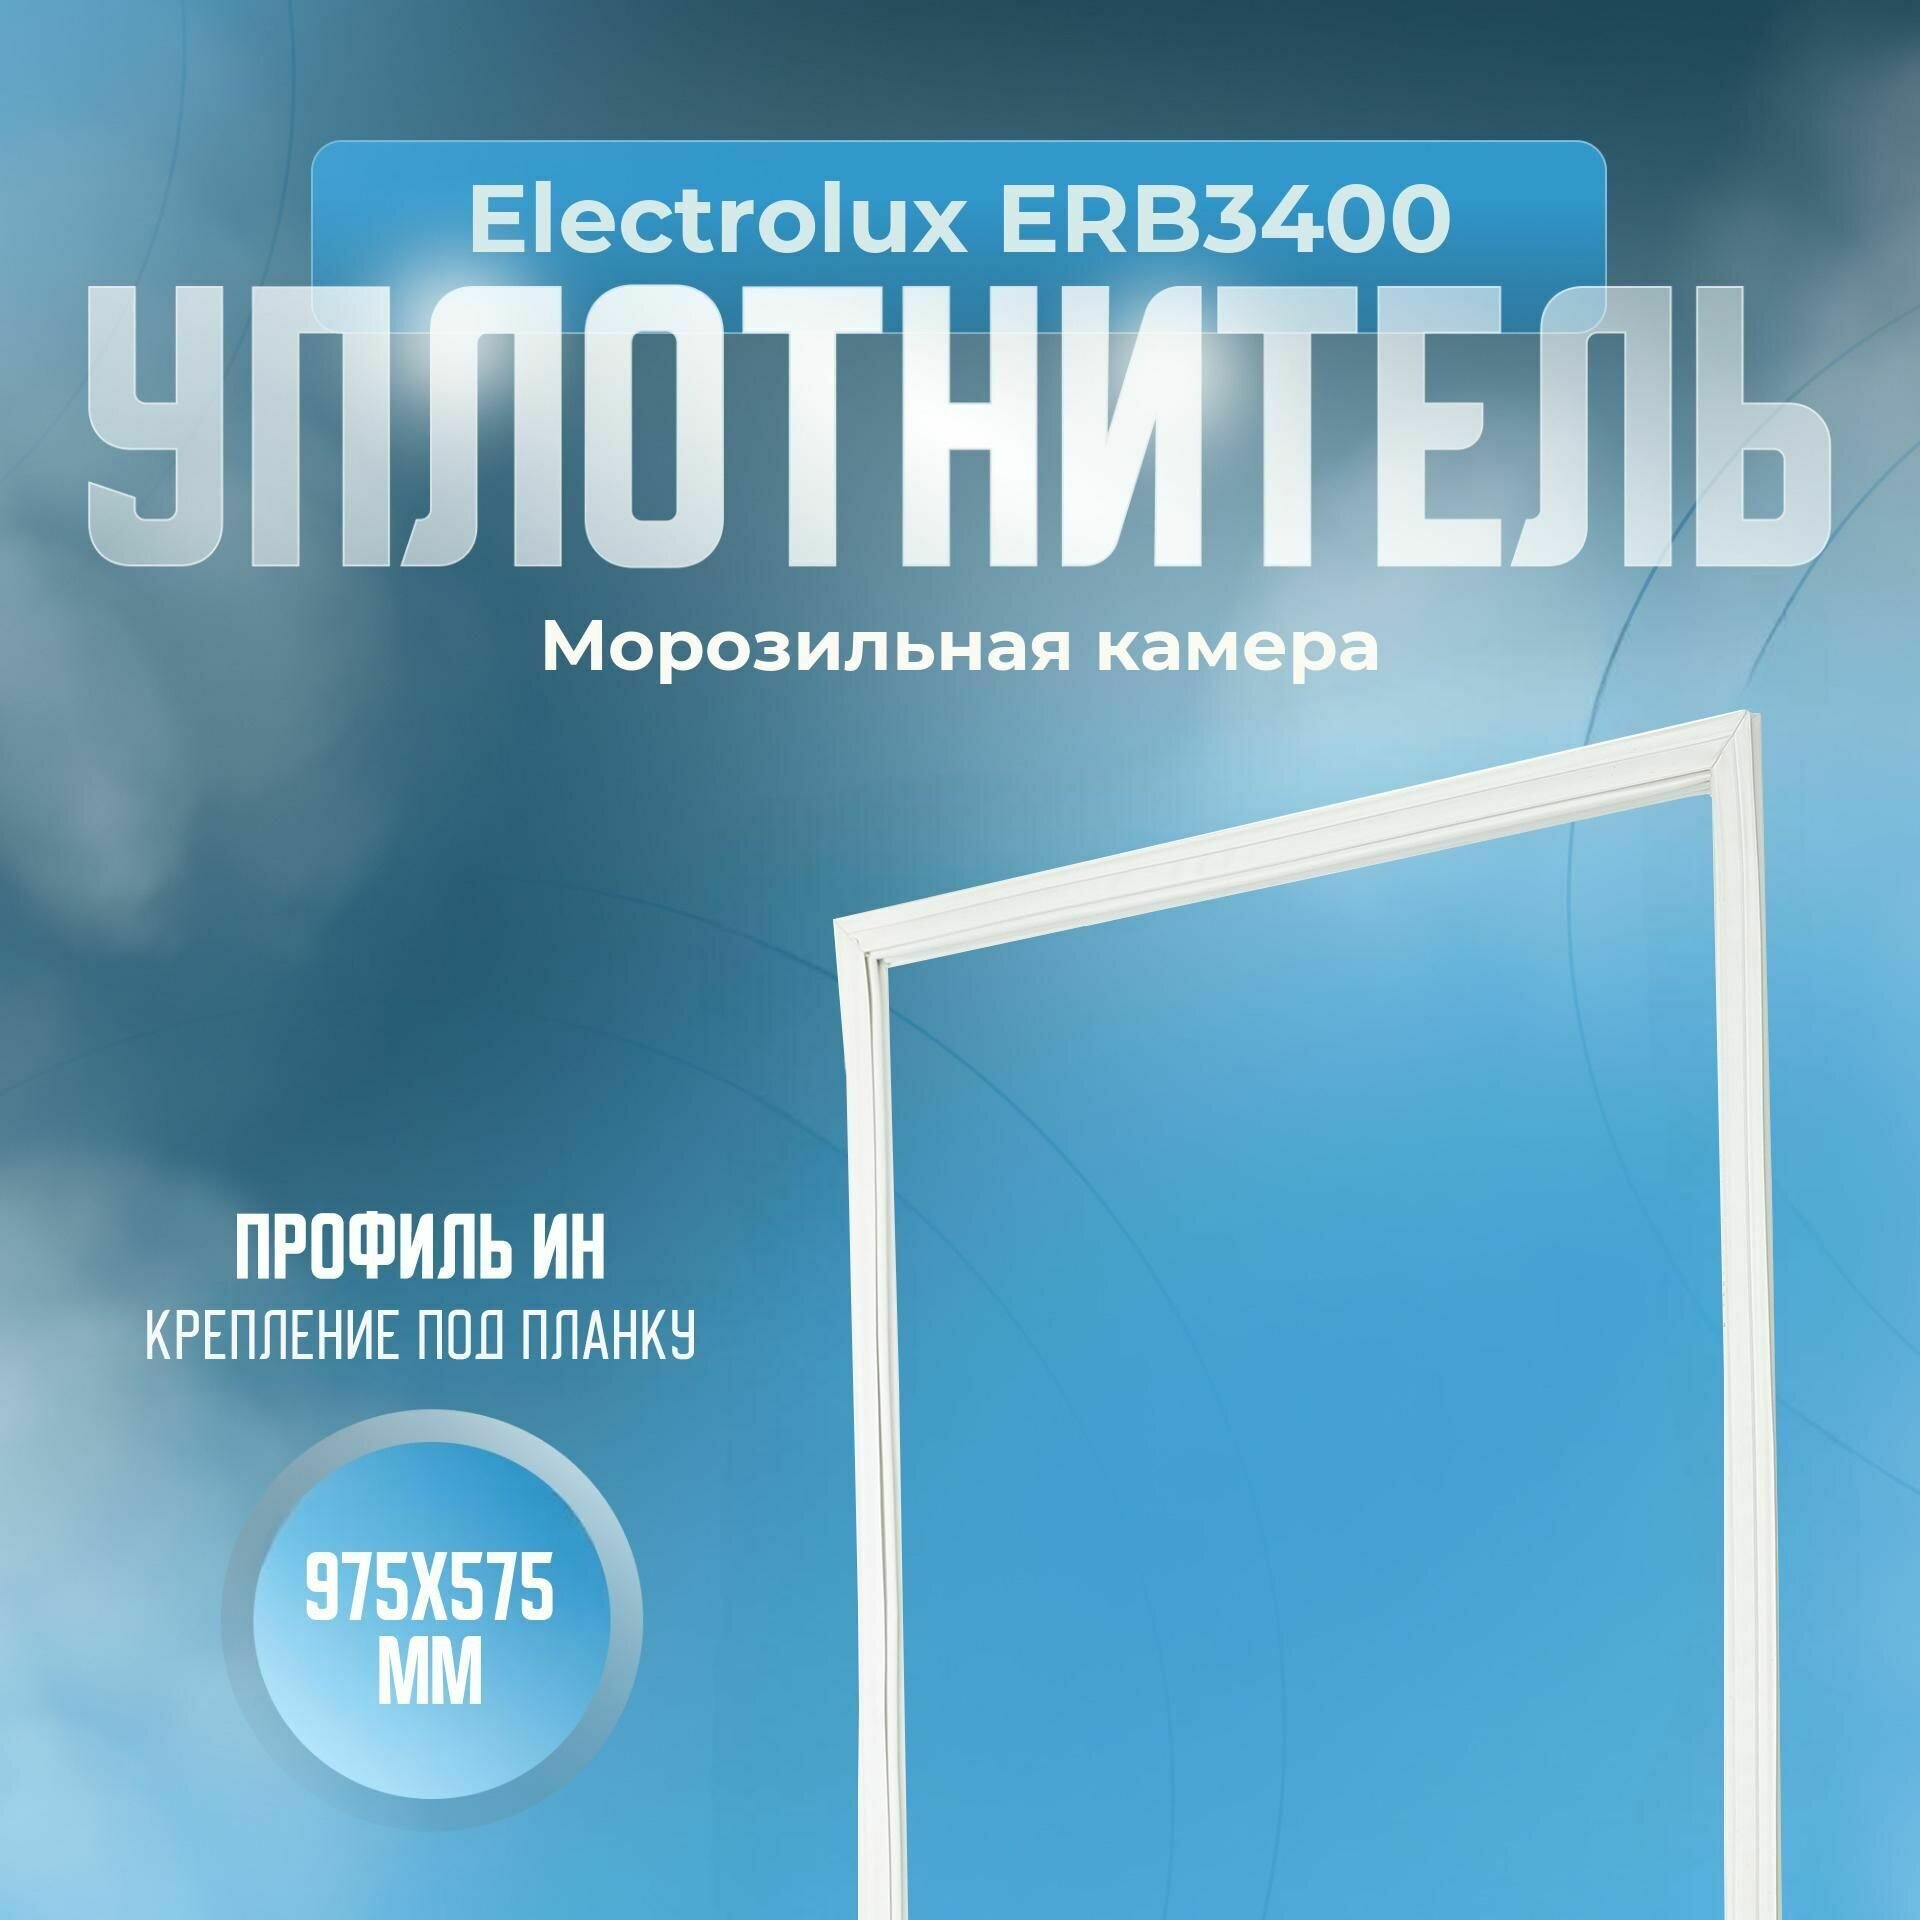 Уплотнитель Electrolux ERB 4199X. х. к, Размер - 1130х570 мм. ИН